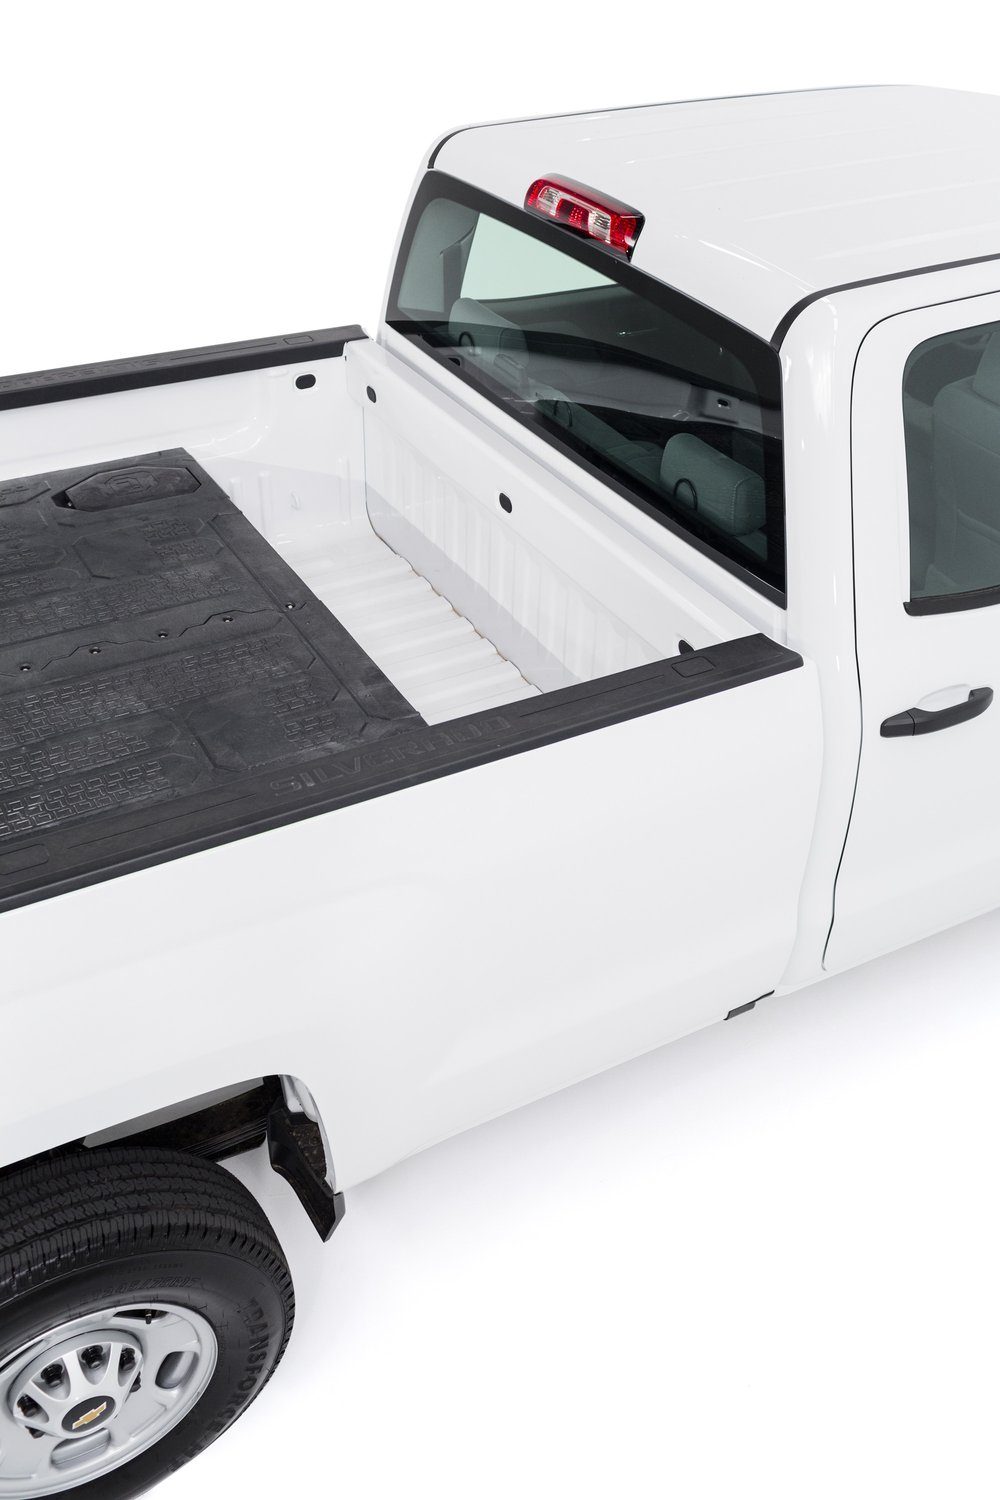 '19-23 Chevy/GMC 1500 Truck Bed Storage System Bed Organization Decked display